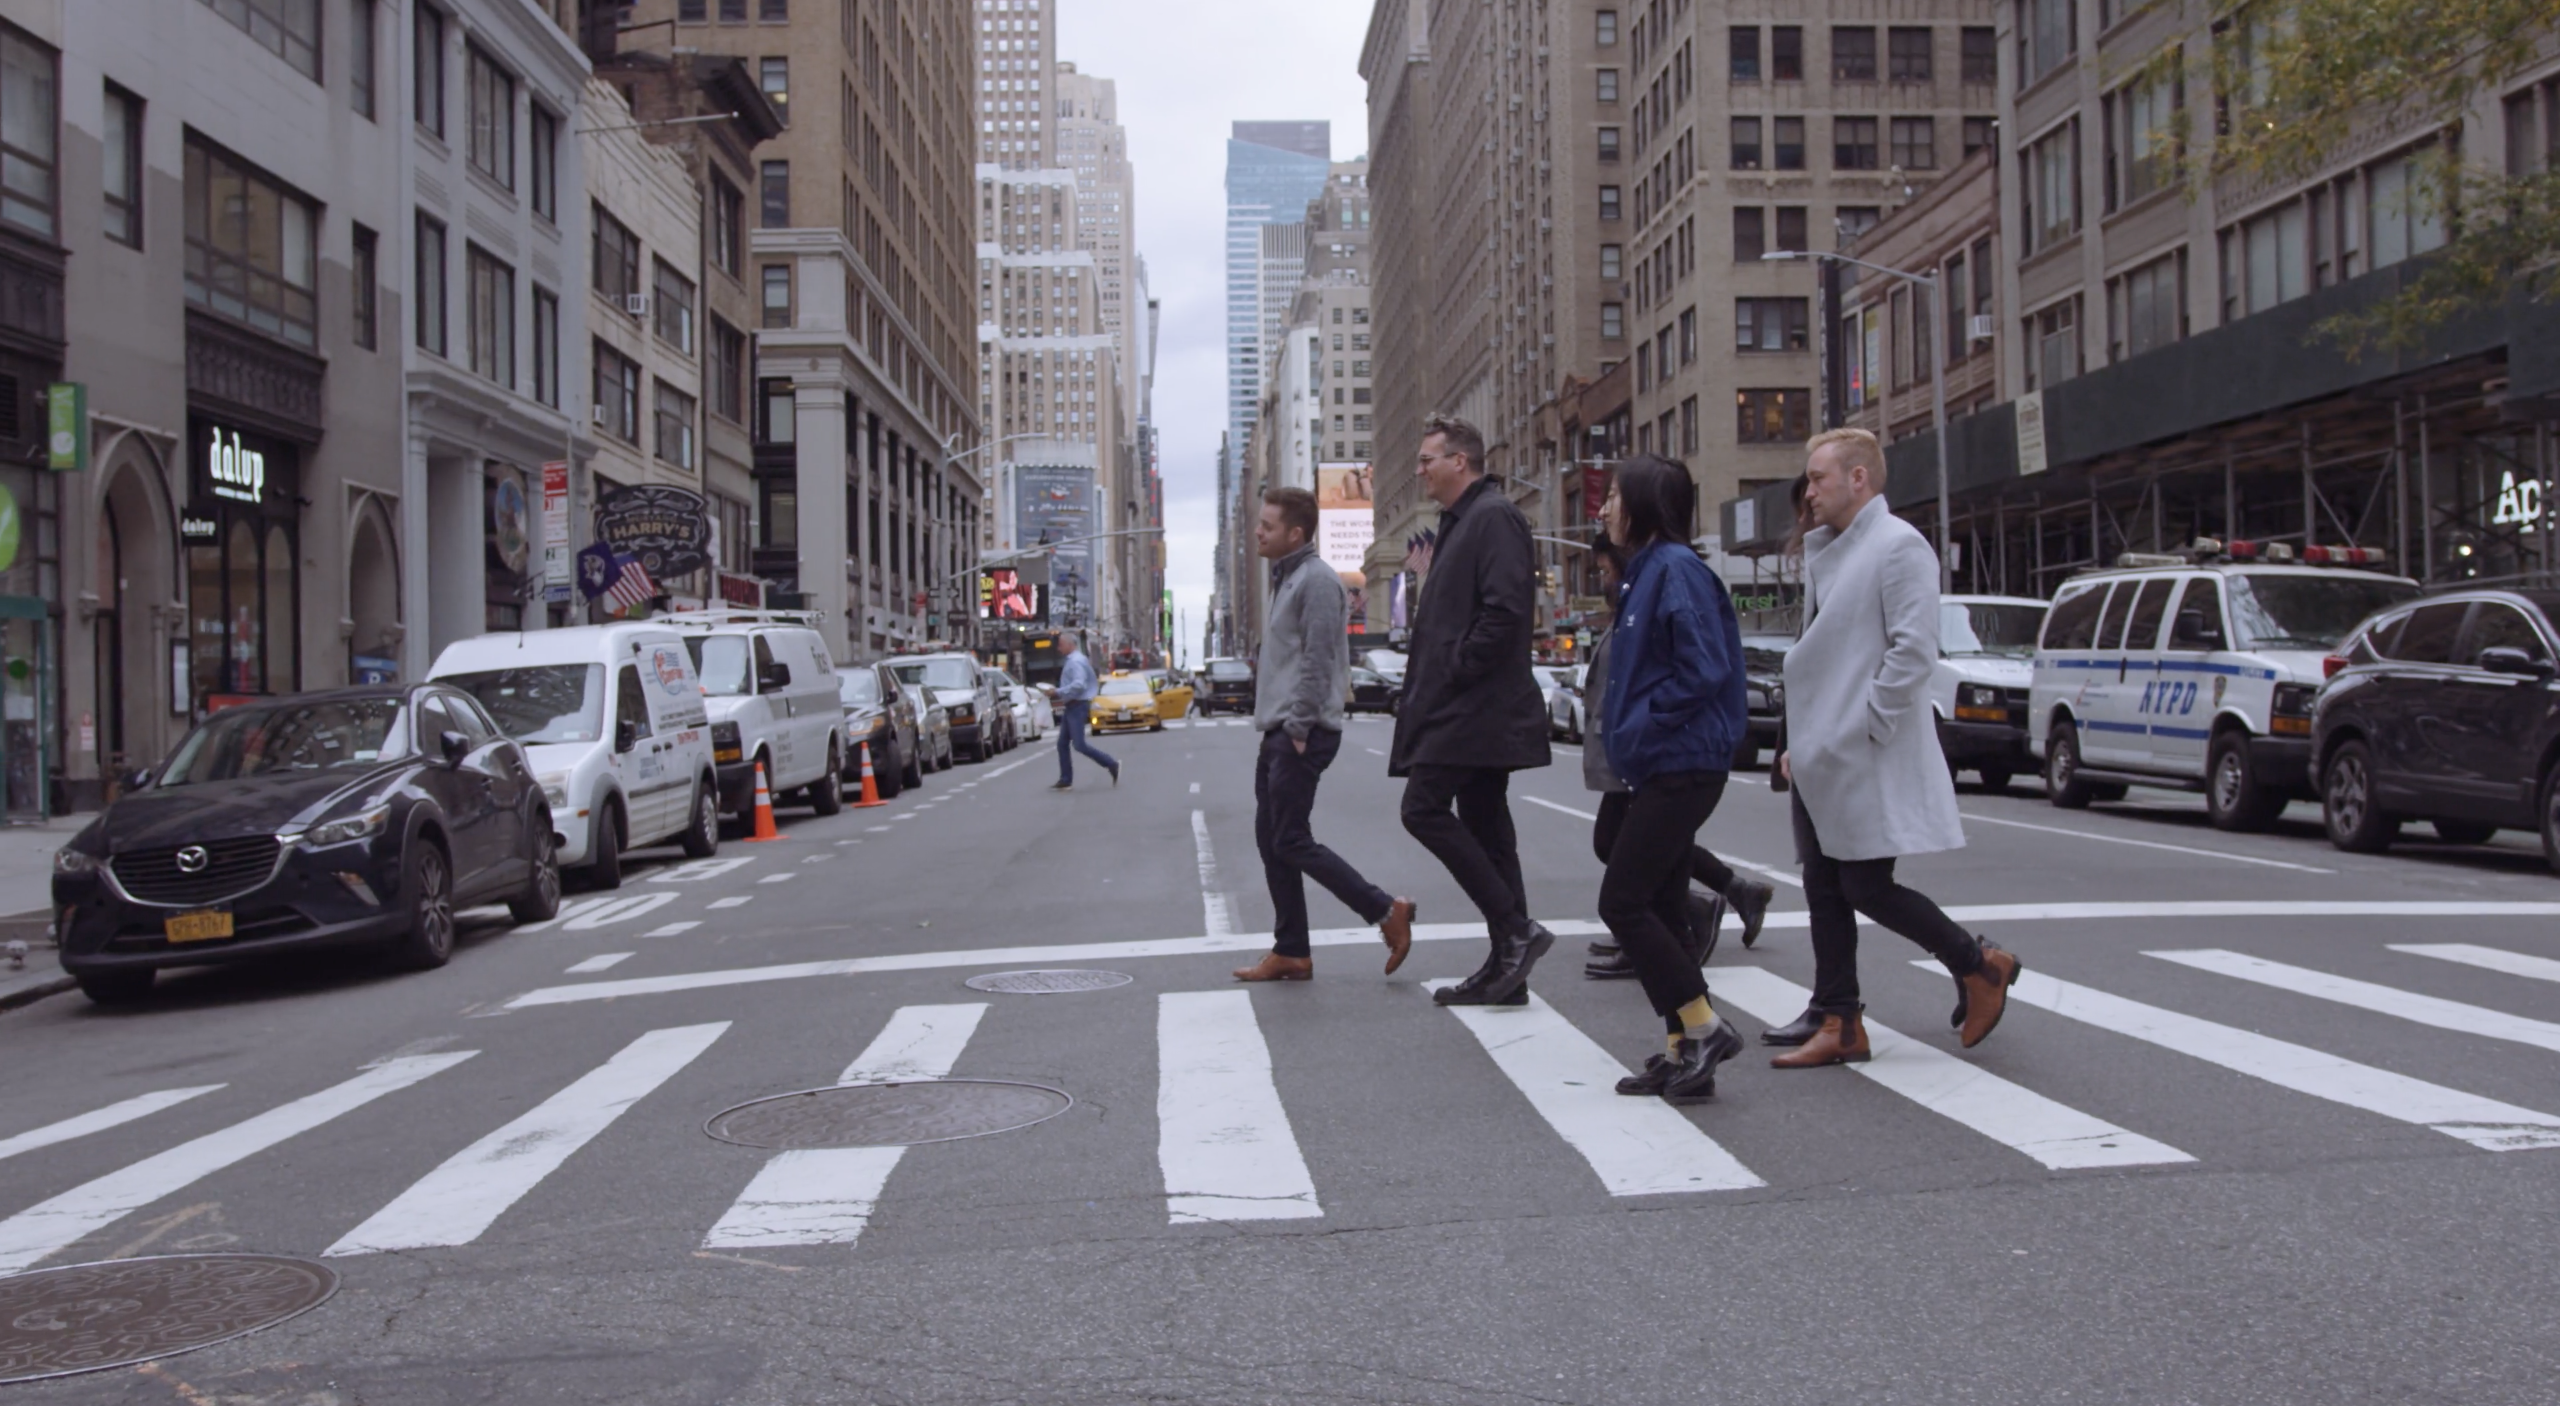 IU EDSA Design Studio NYC Three men and two women walking across a city street on a crosswalk